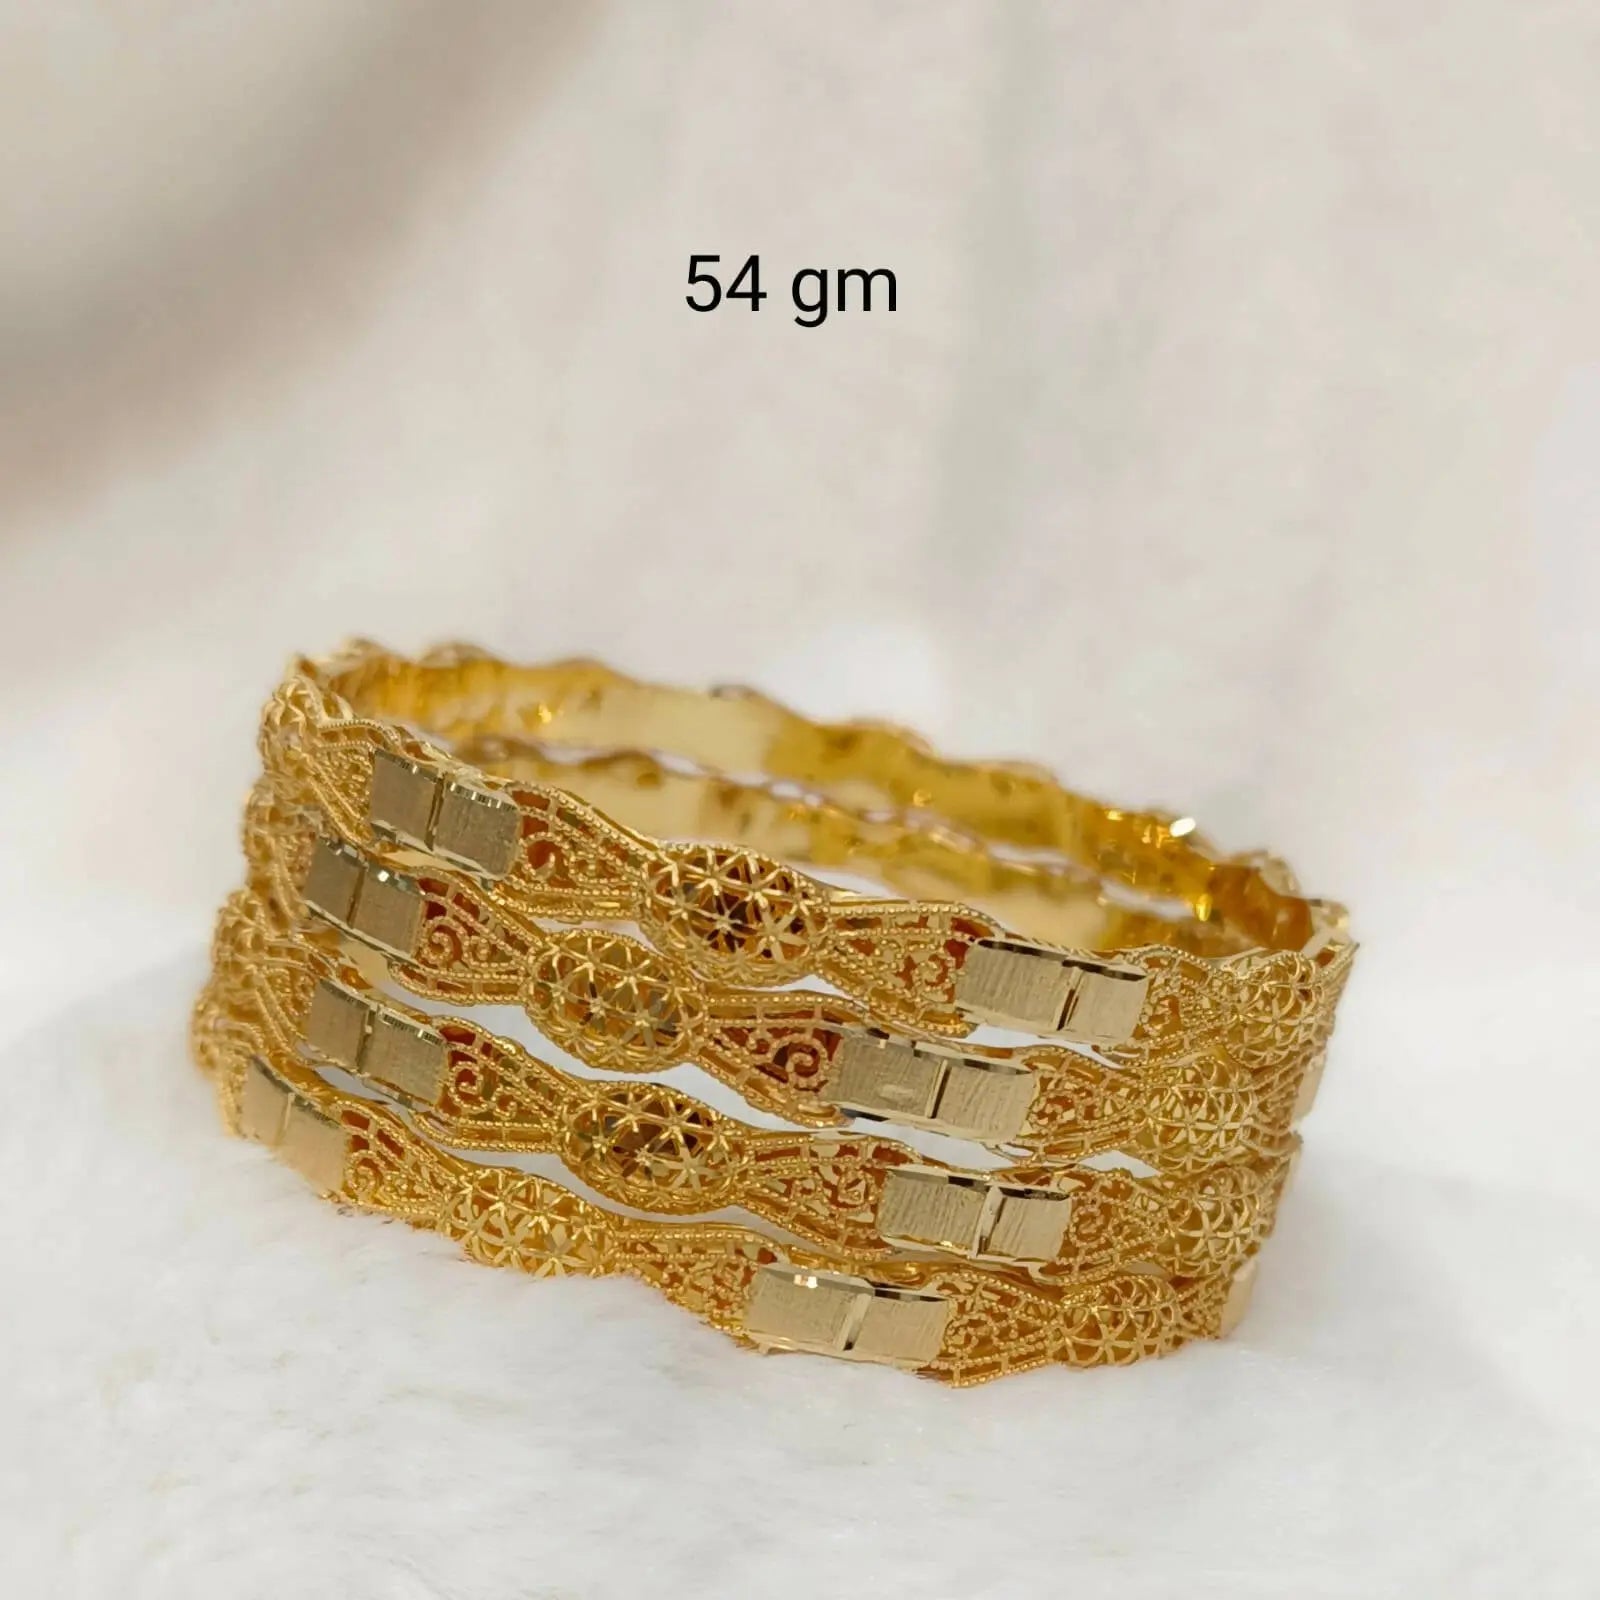 Display of dozens of golden bracelets in Turkish style - SuperStock